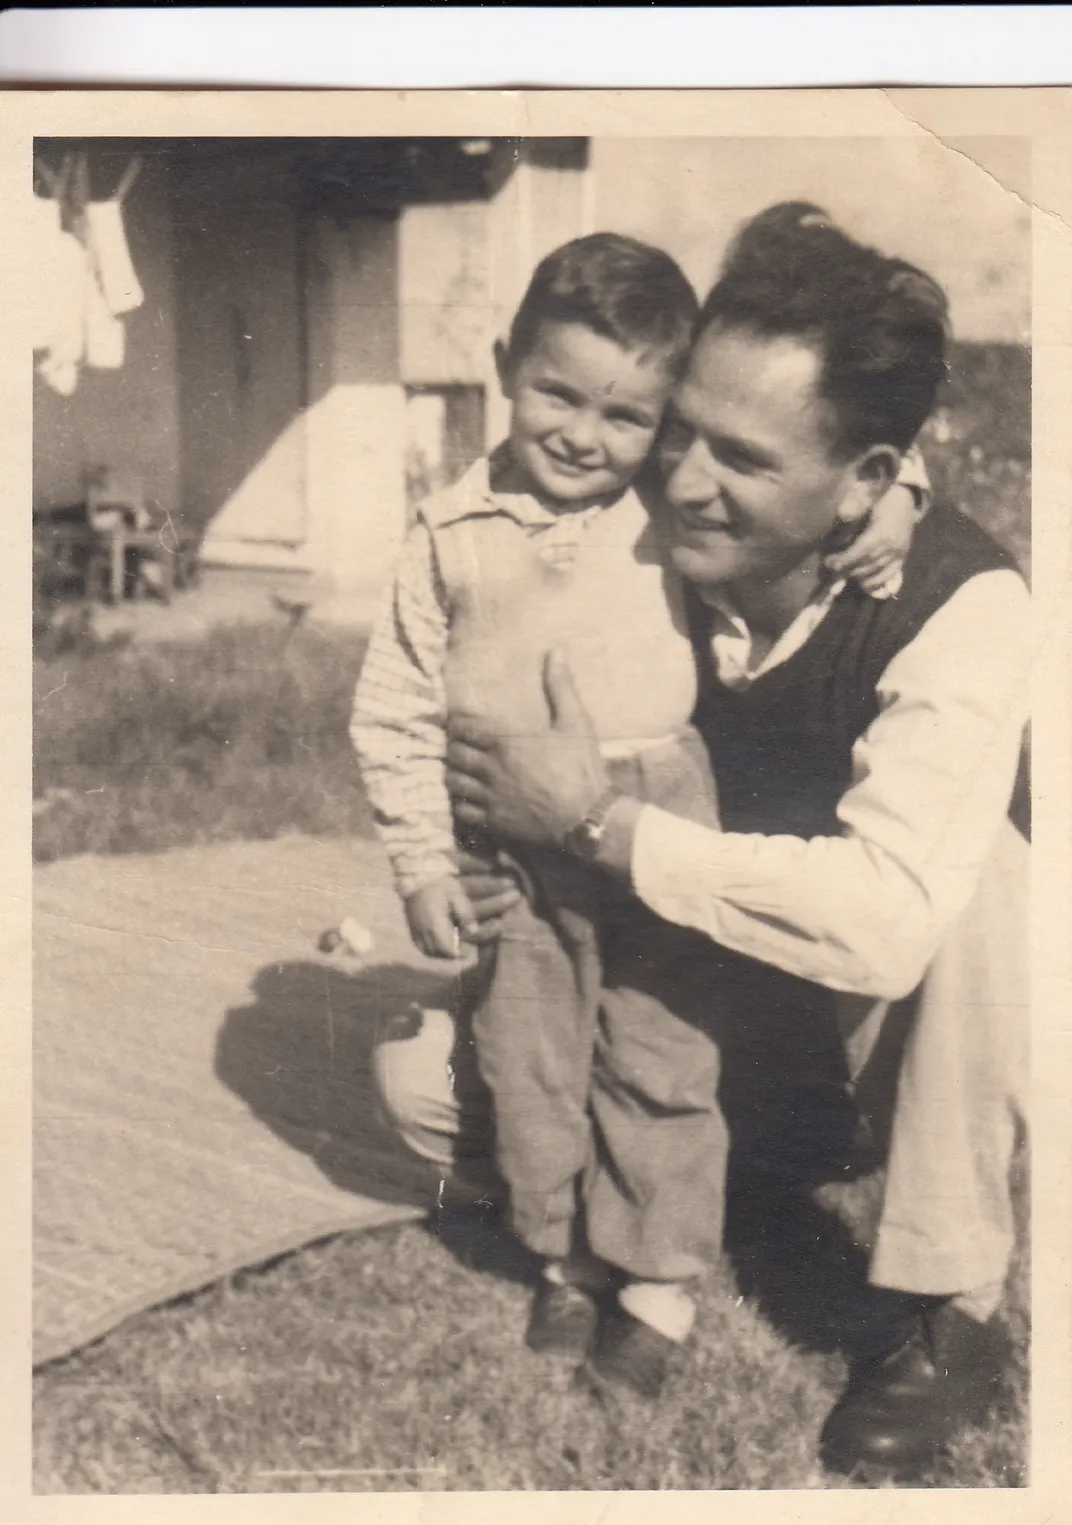 Yair Ron (left) and his father, Jakub "Yakshi" Reisz, around 1955